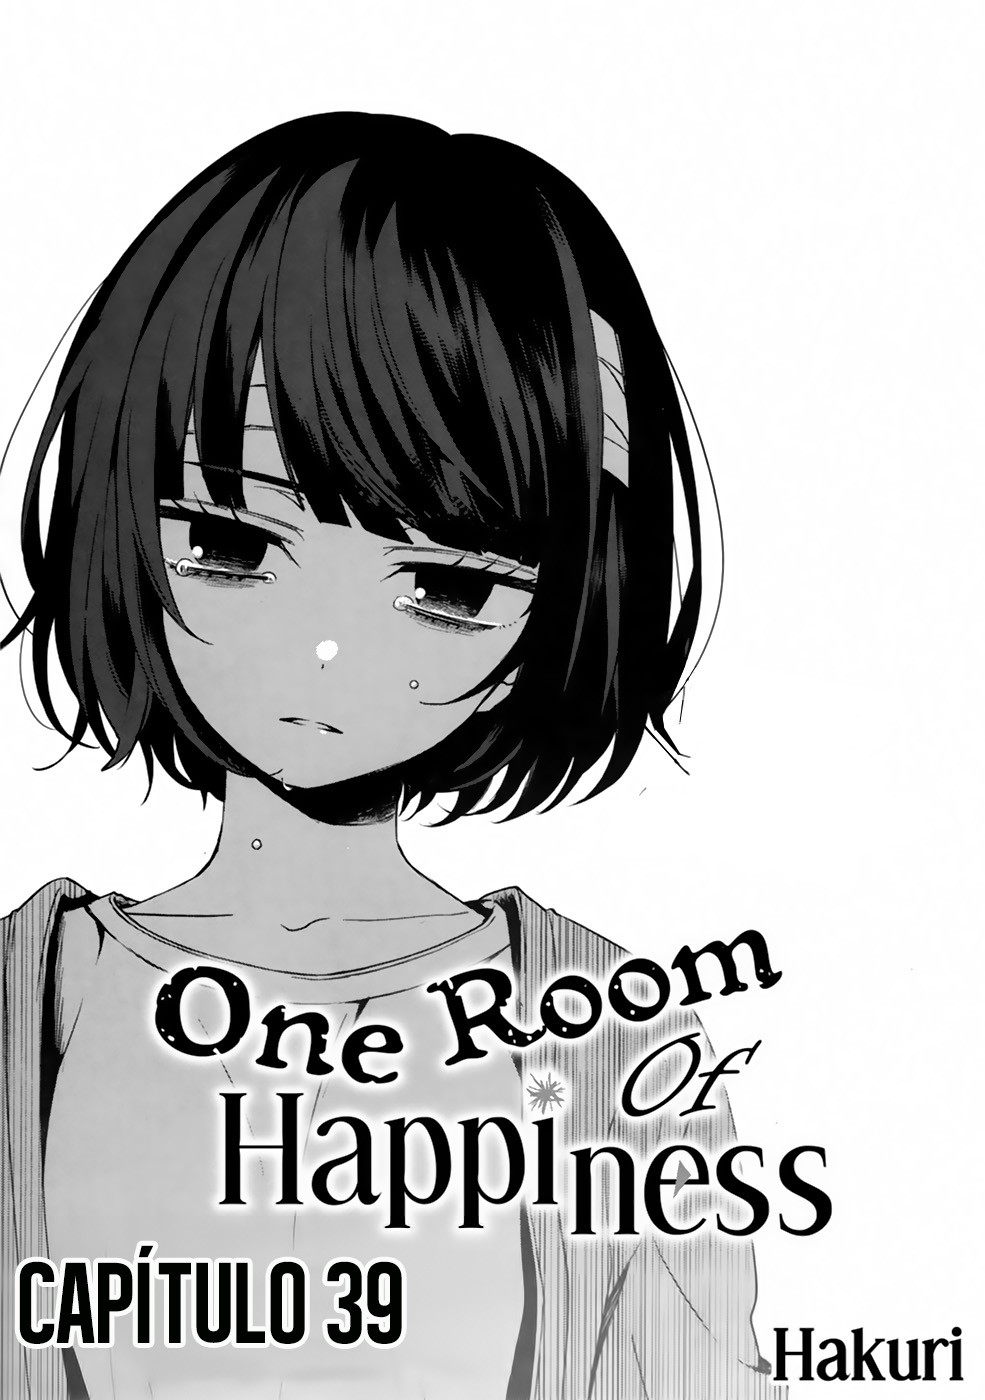 Sachi-iro no One Room (One Room of Happiness)